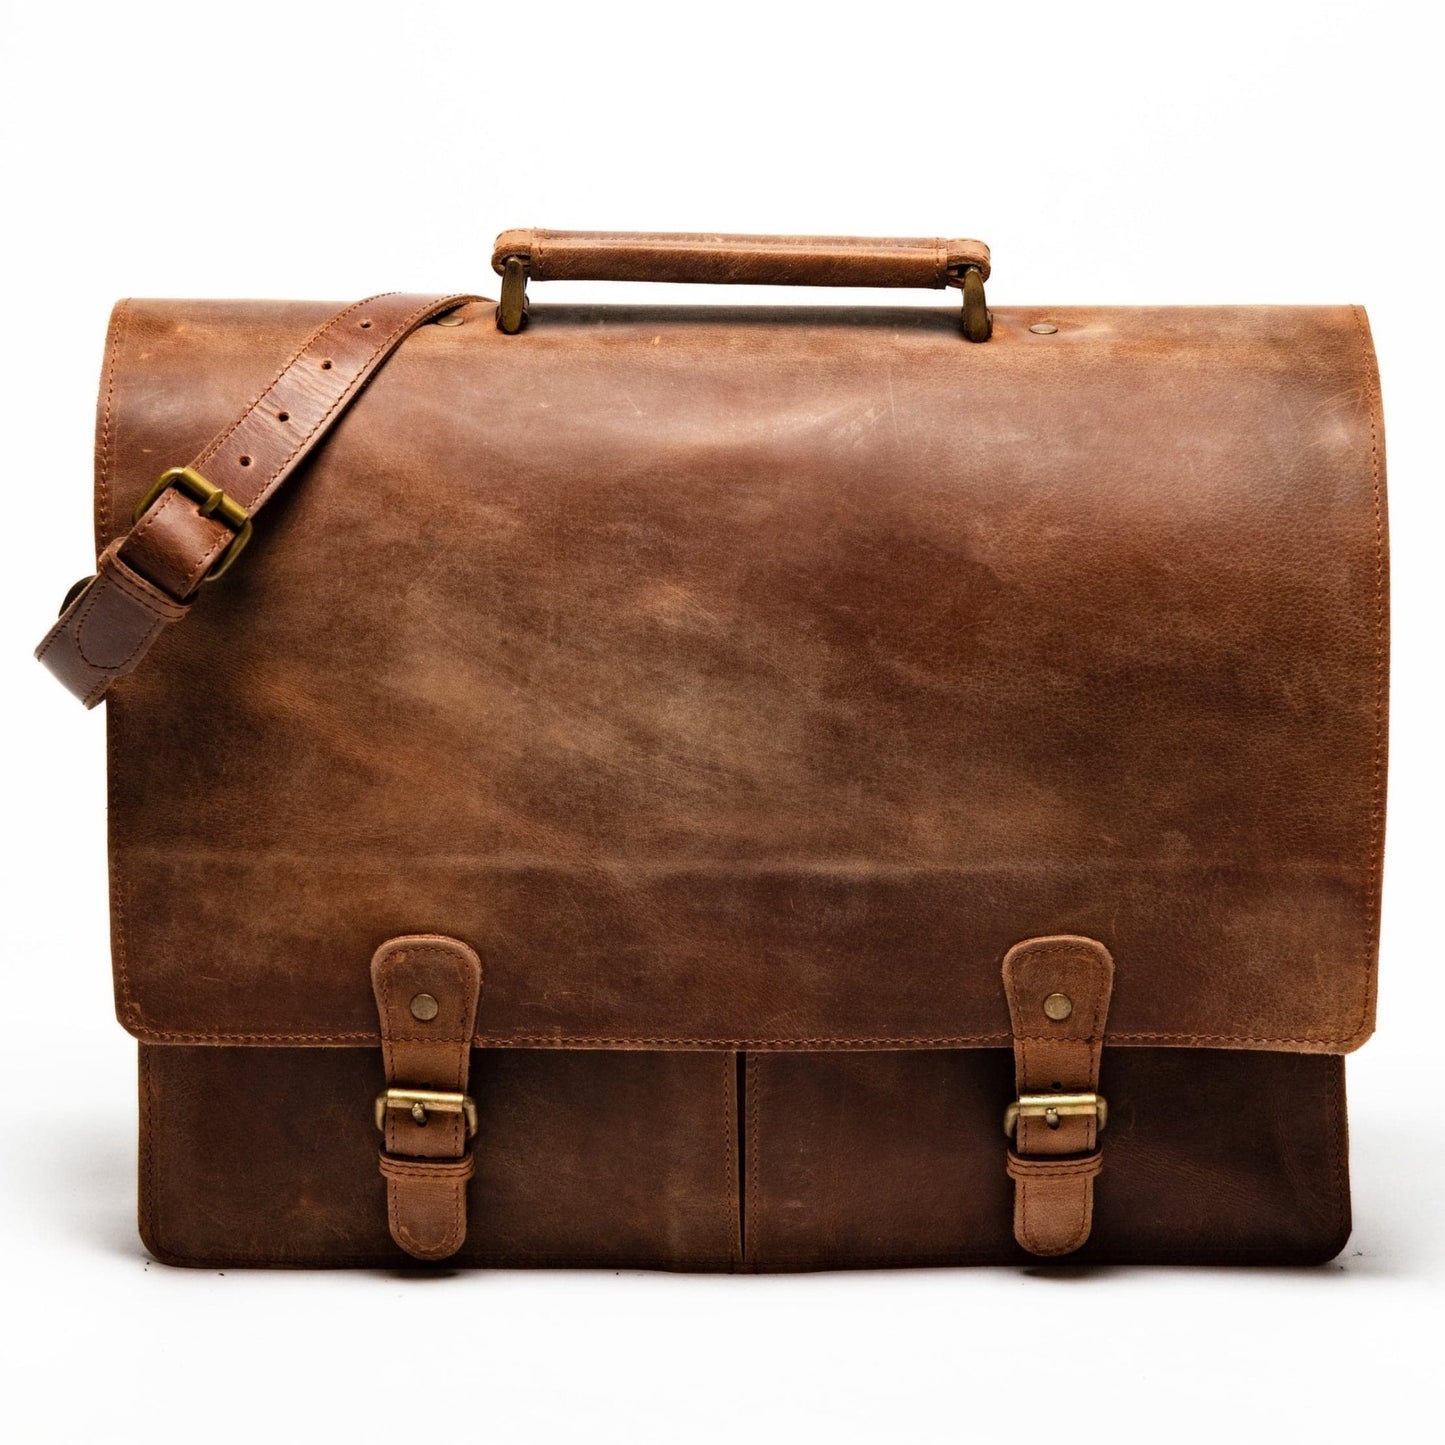 Thomas Leather Briefcase - HIDES